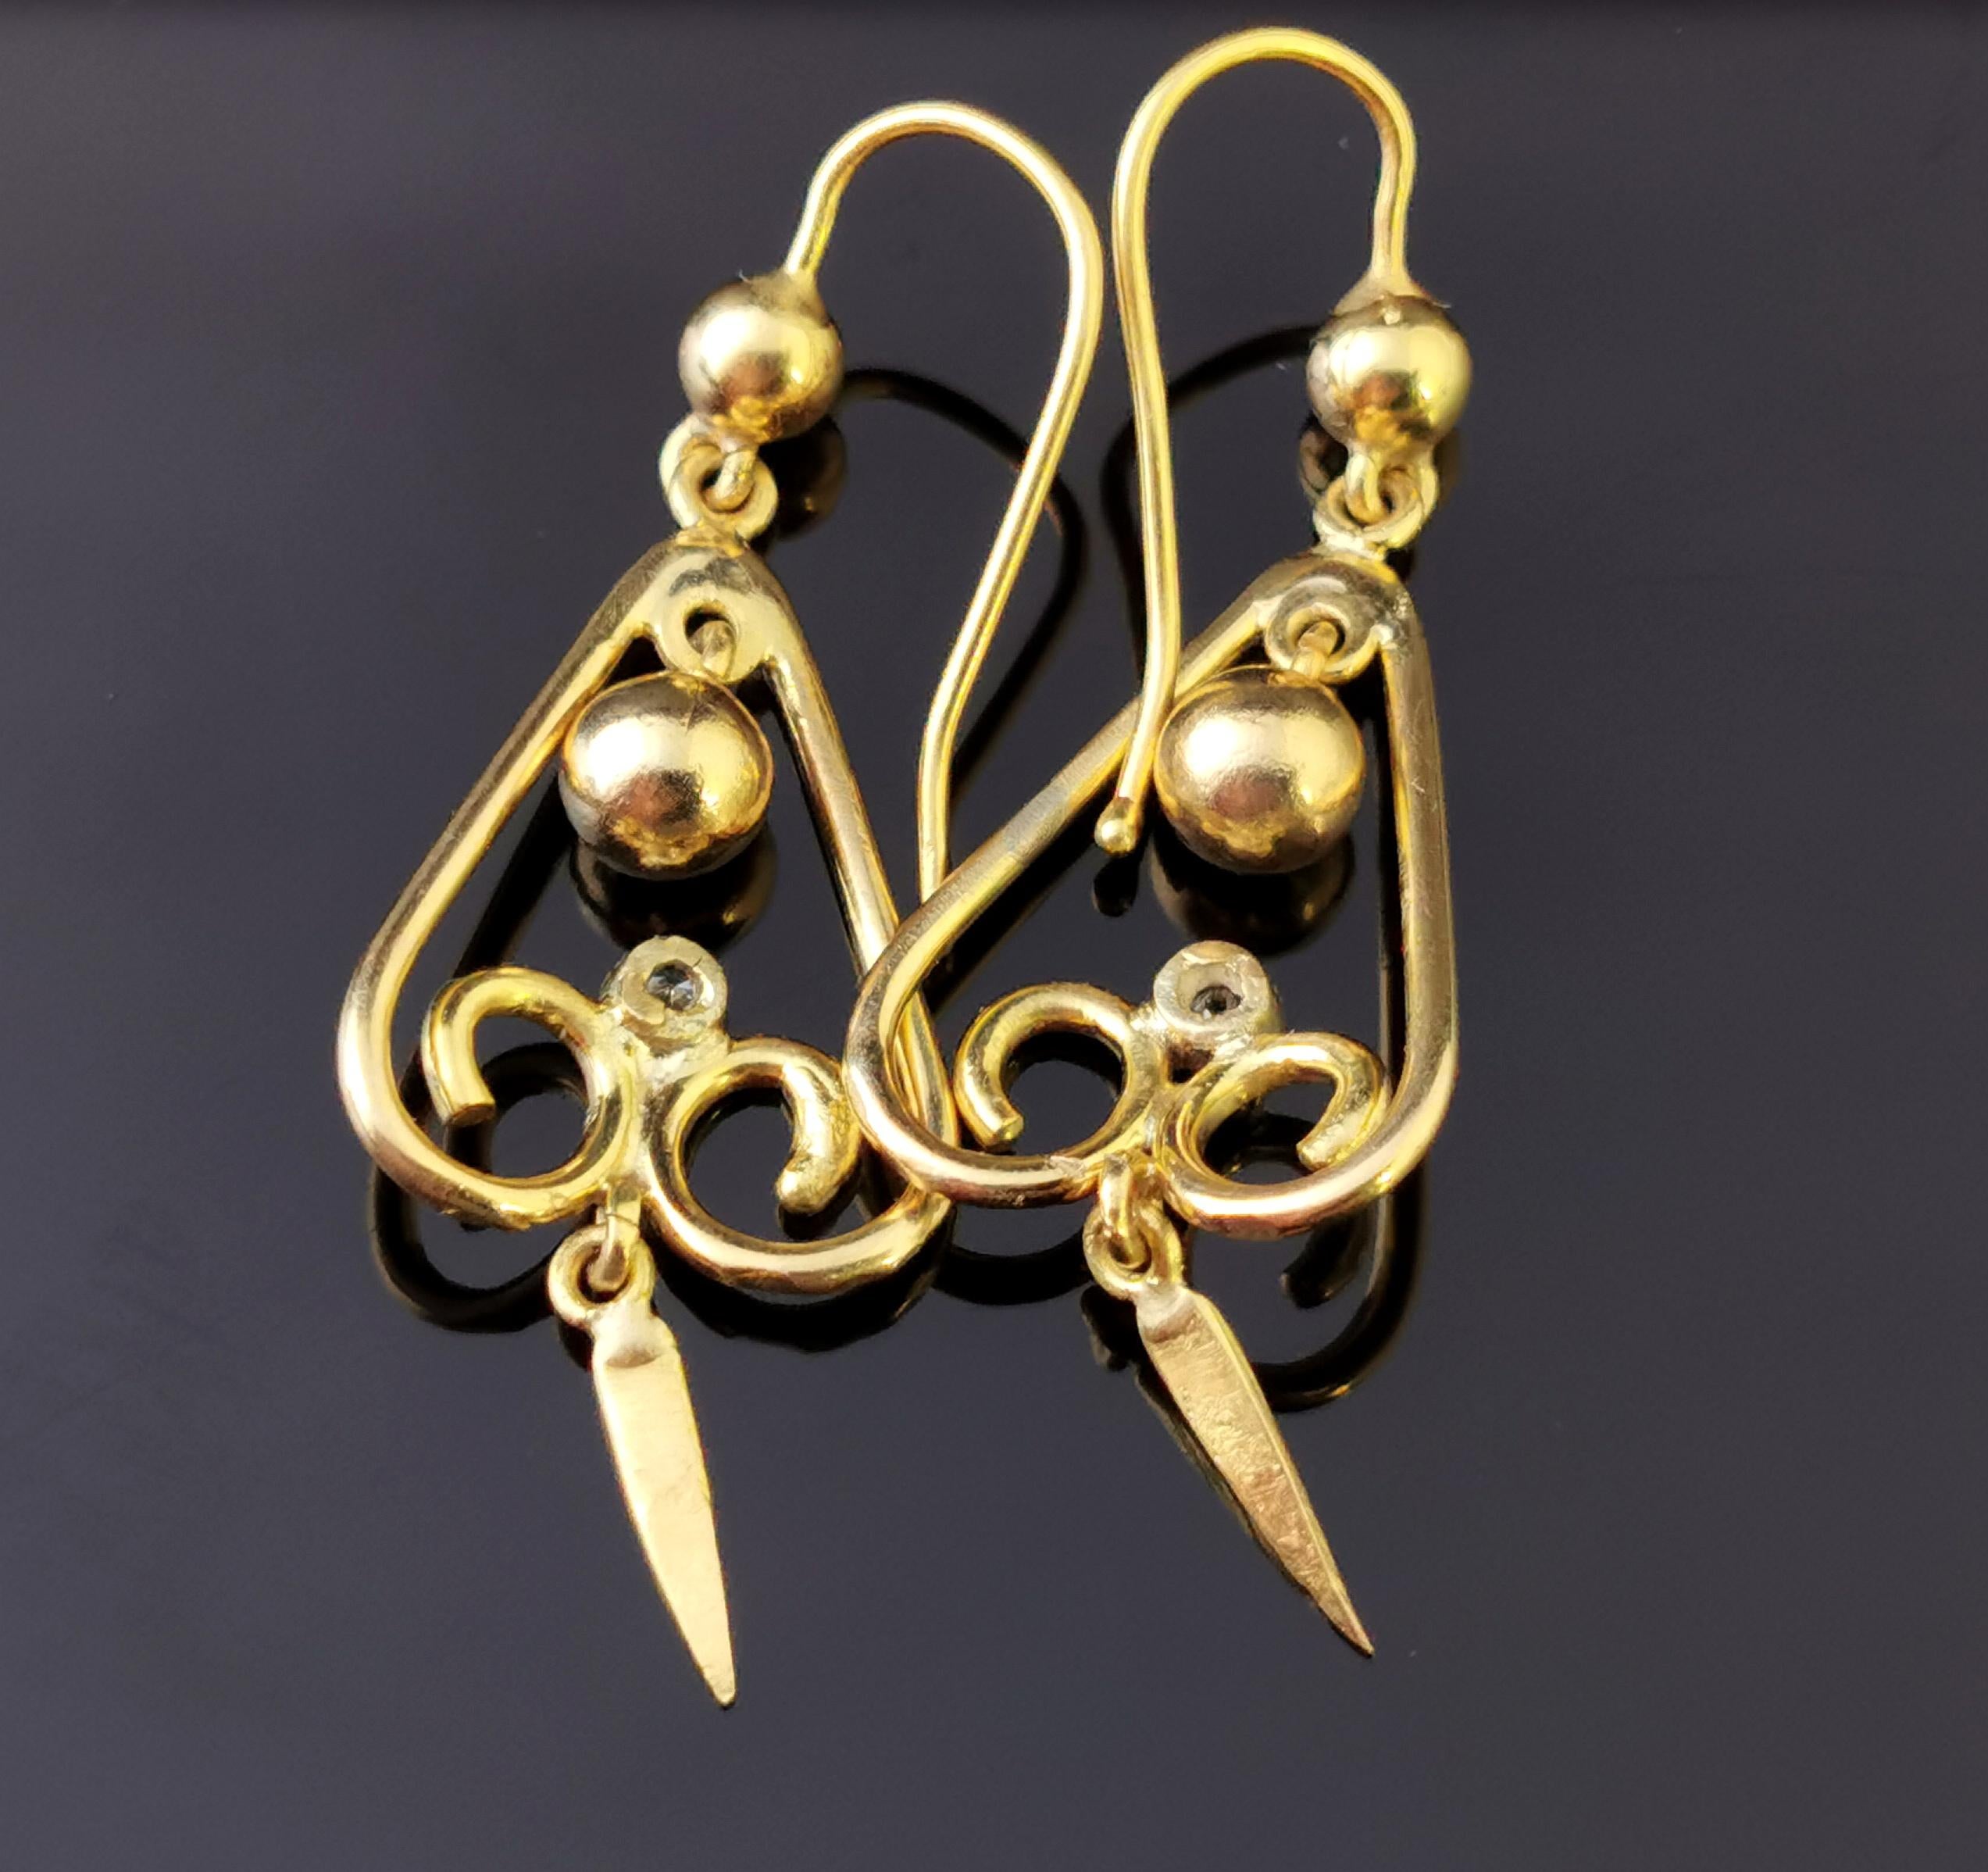 Antique Victorian Diamond Drop Earrings, 15ct Yellow Gold, Dangly Earrings 1